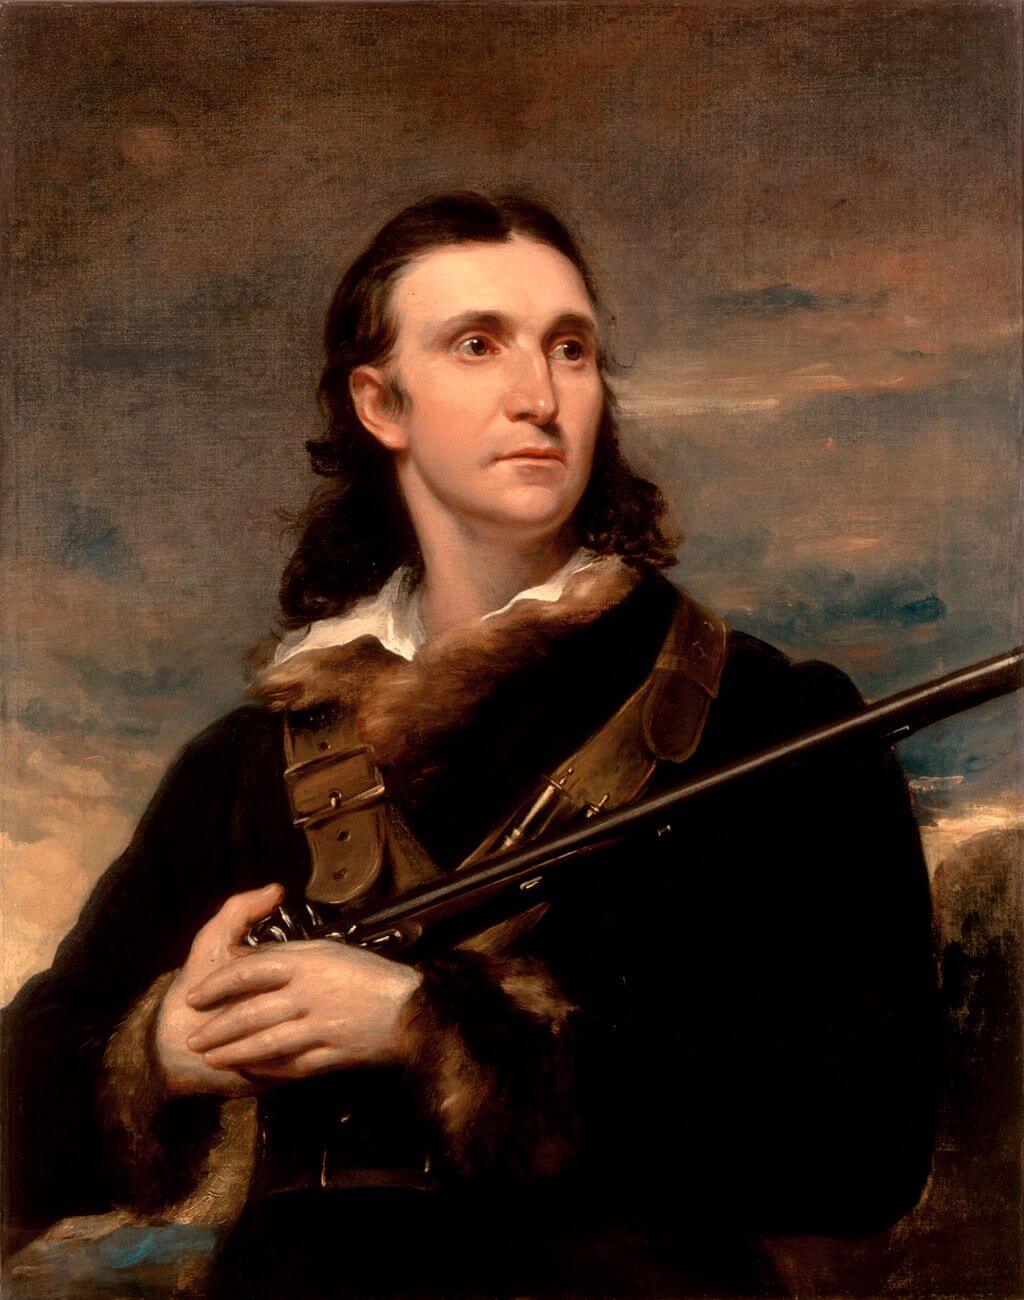 John James Audubon portrait